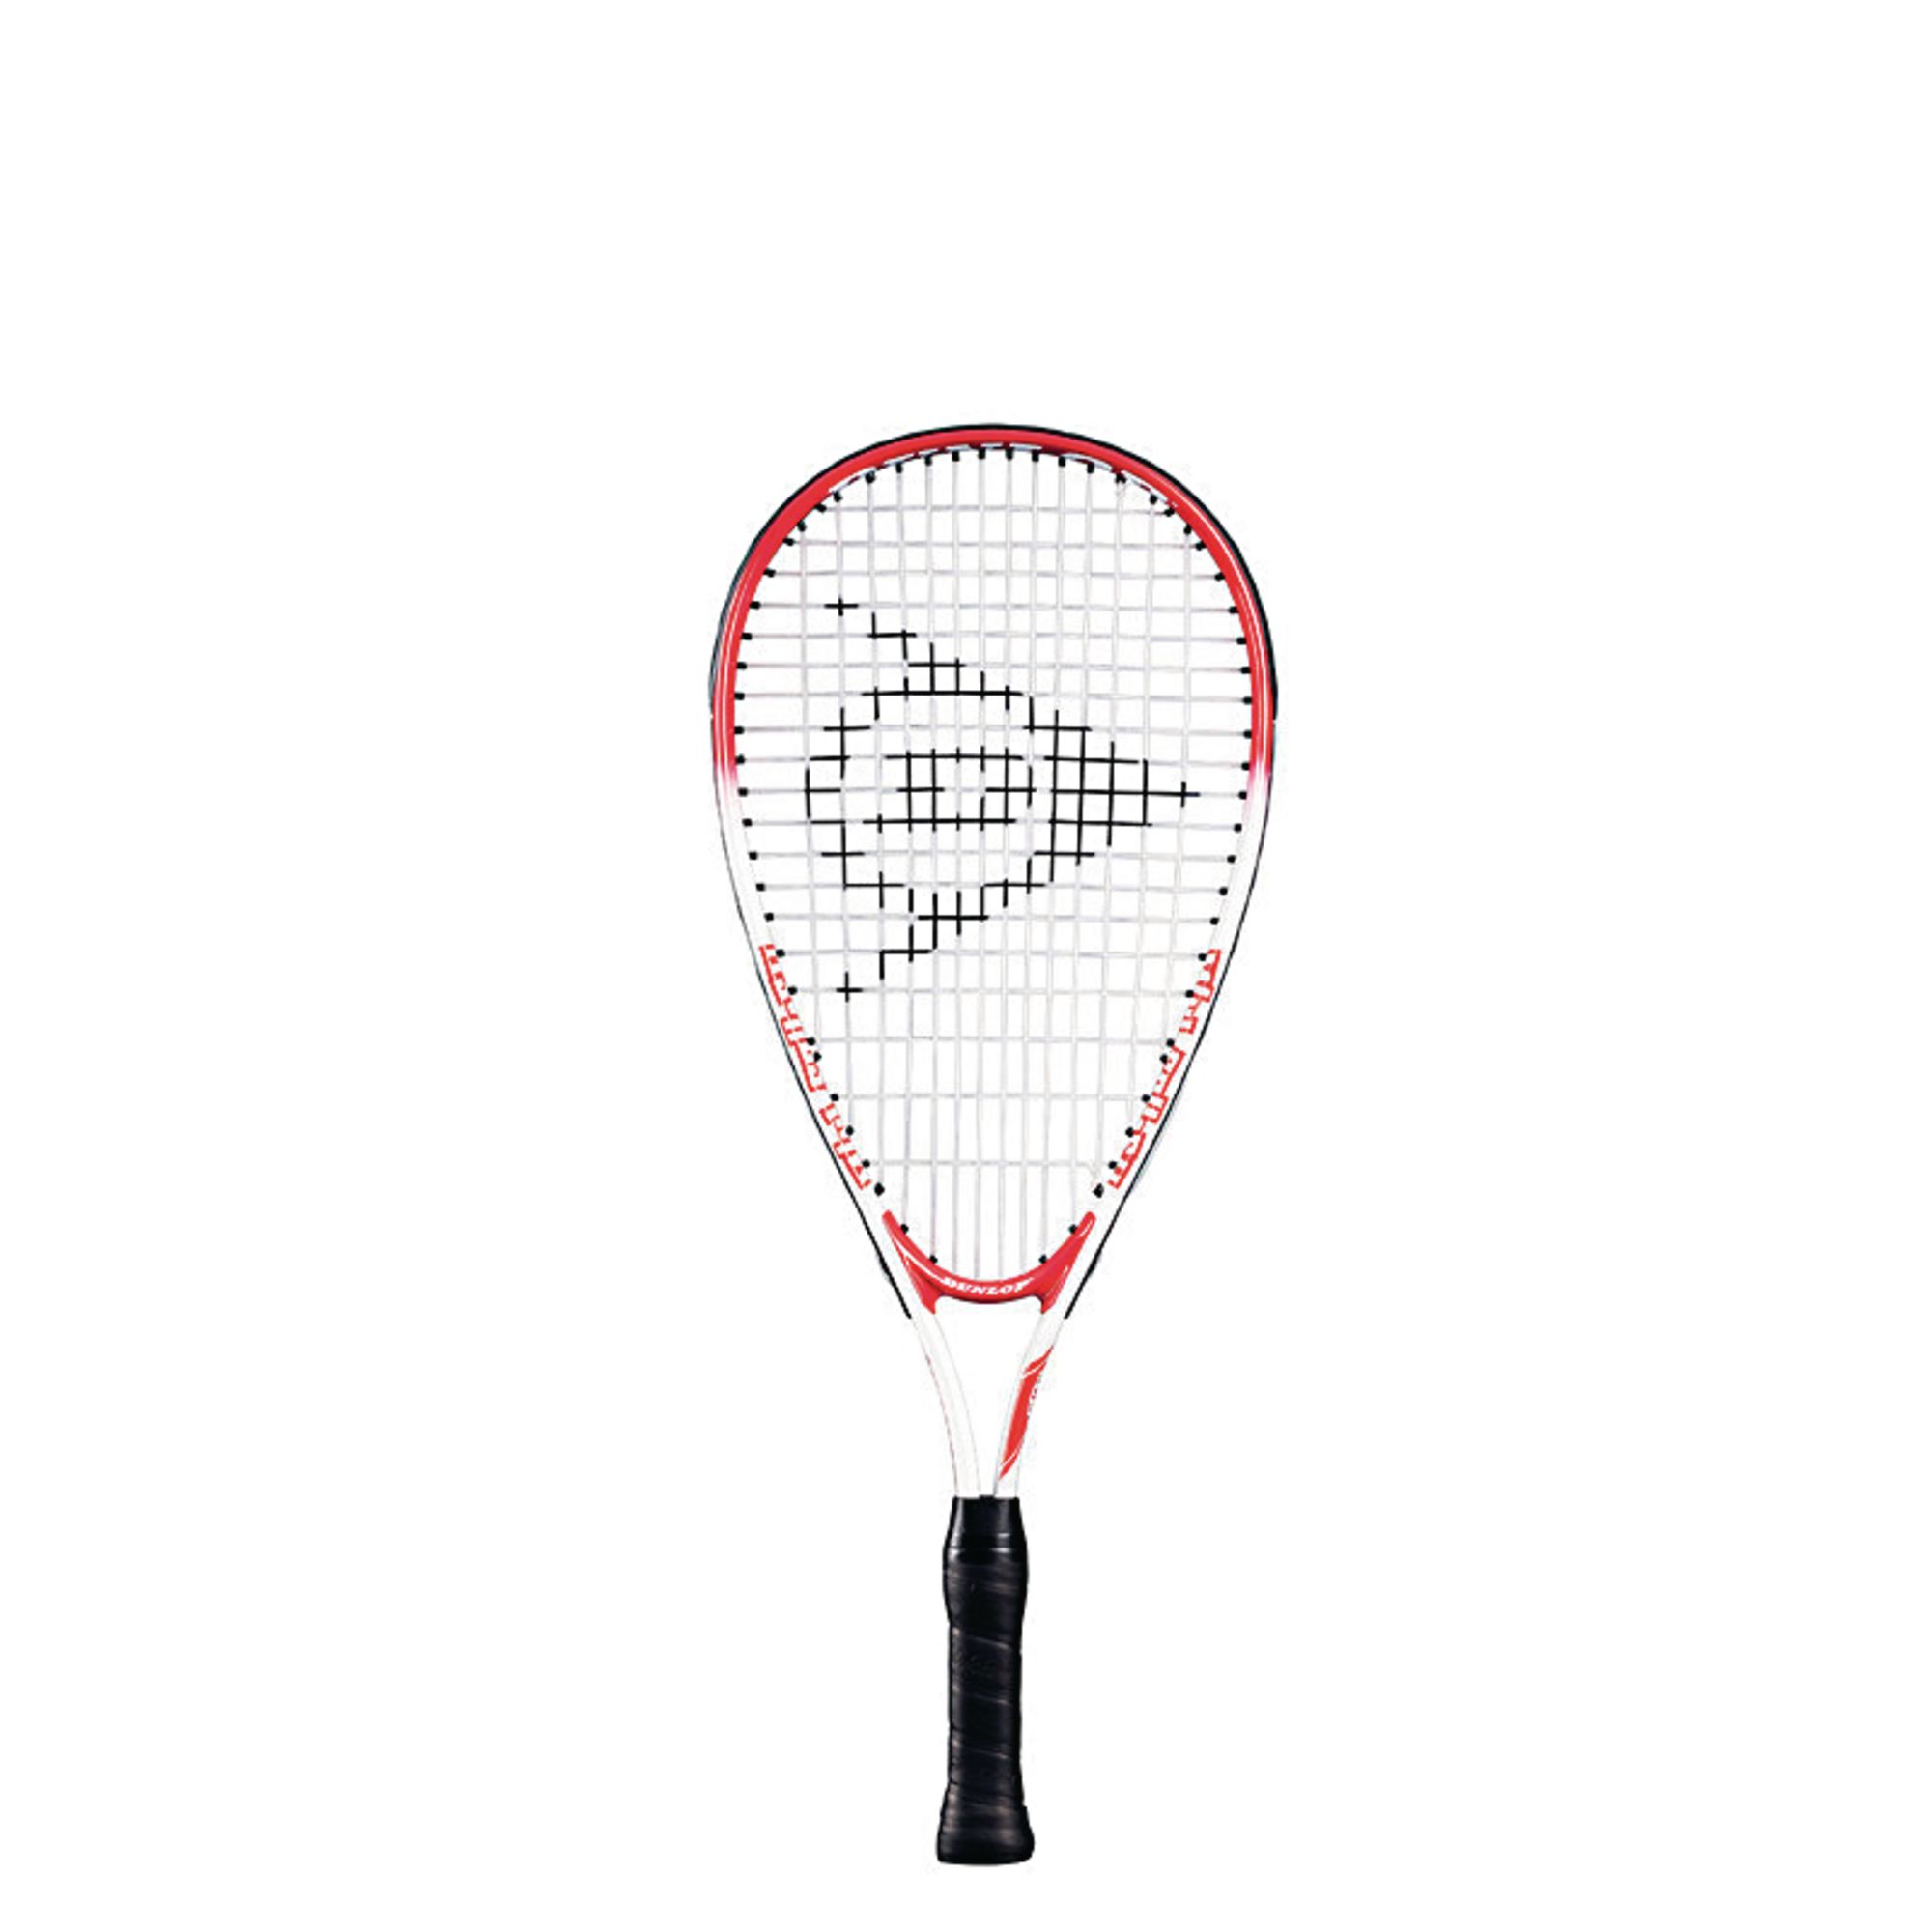 CreativeMinds UK Dunlop Kids Fun Mini Squash Racket Shortened Frame Starter Racquet-Red